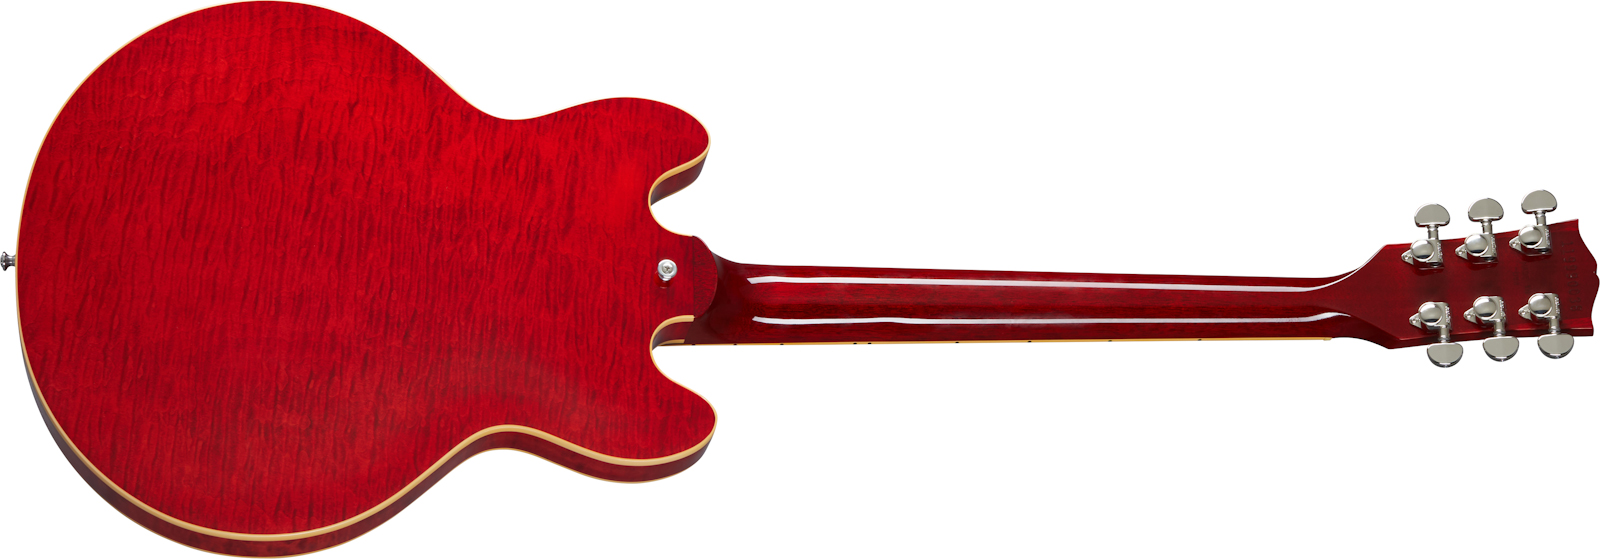 Gibson Es-339 Figured Modern 2020 2h Ht Rw - Sixties Cherry - Semi hollow elektriche gitaar - Variation 1